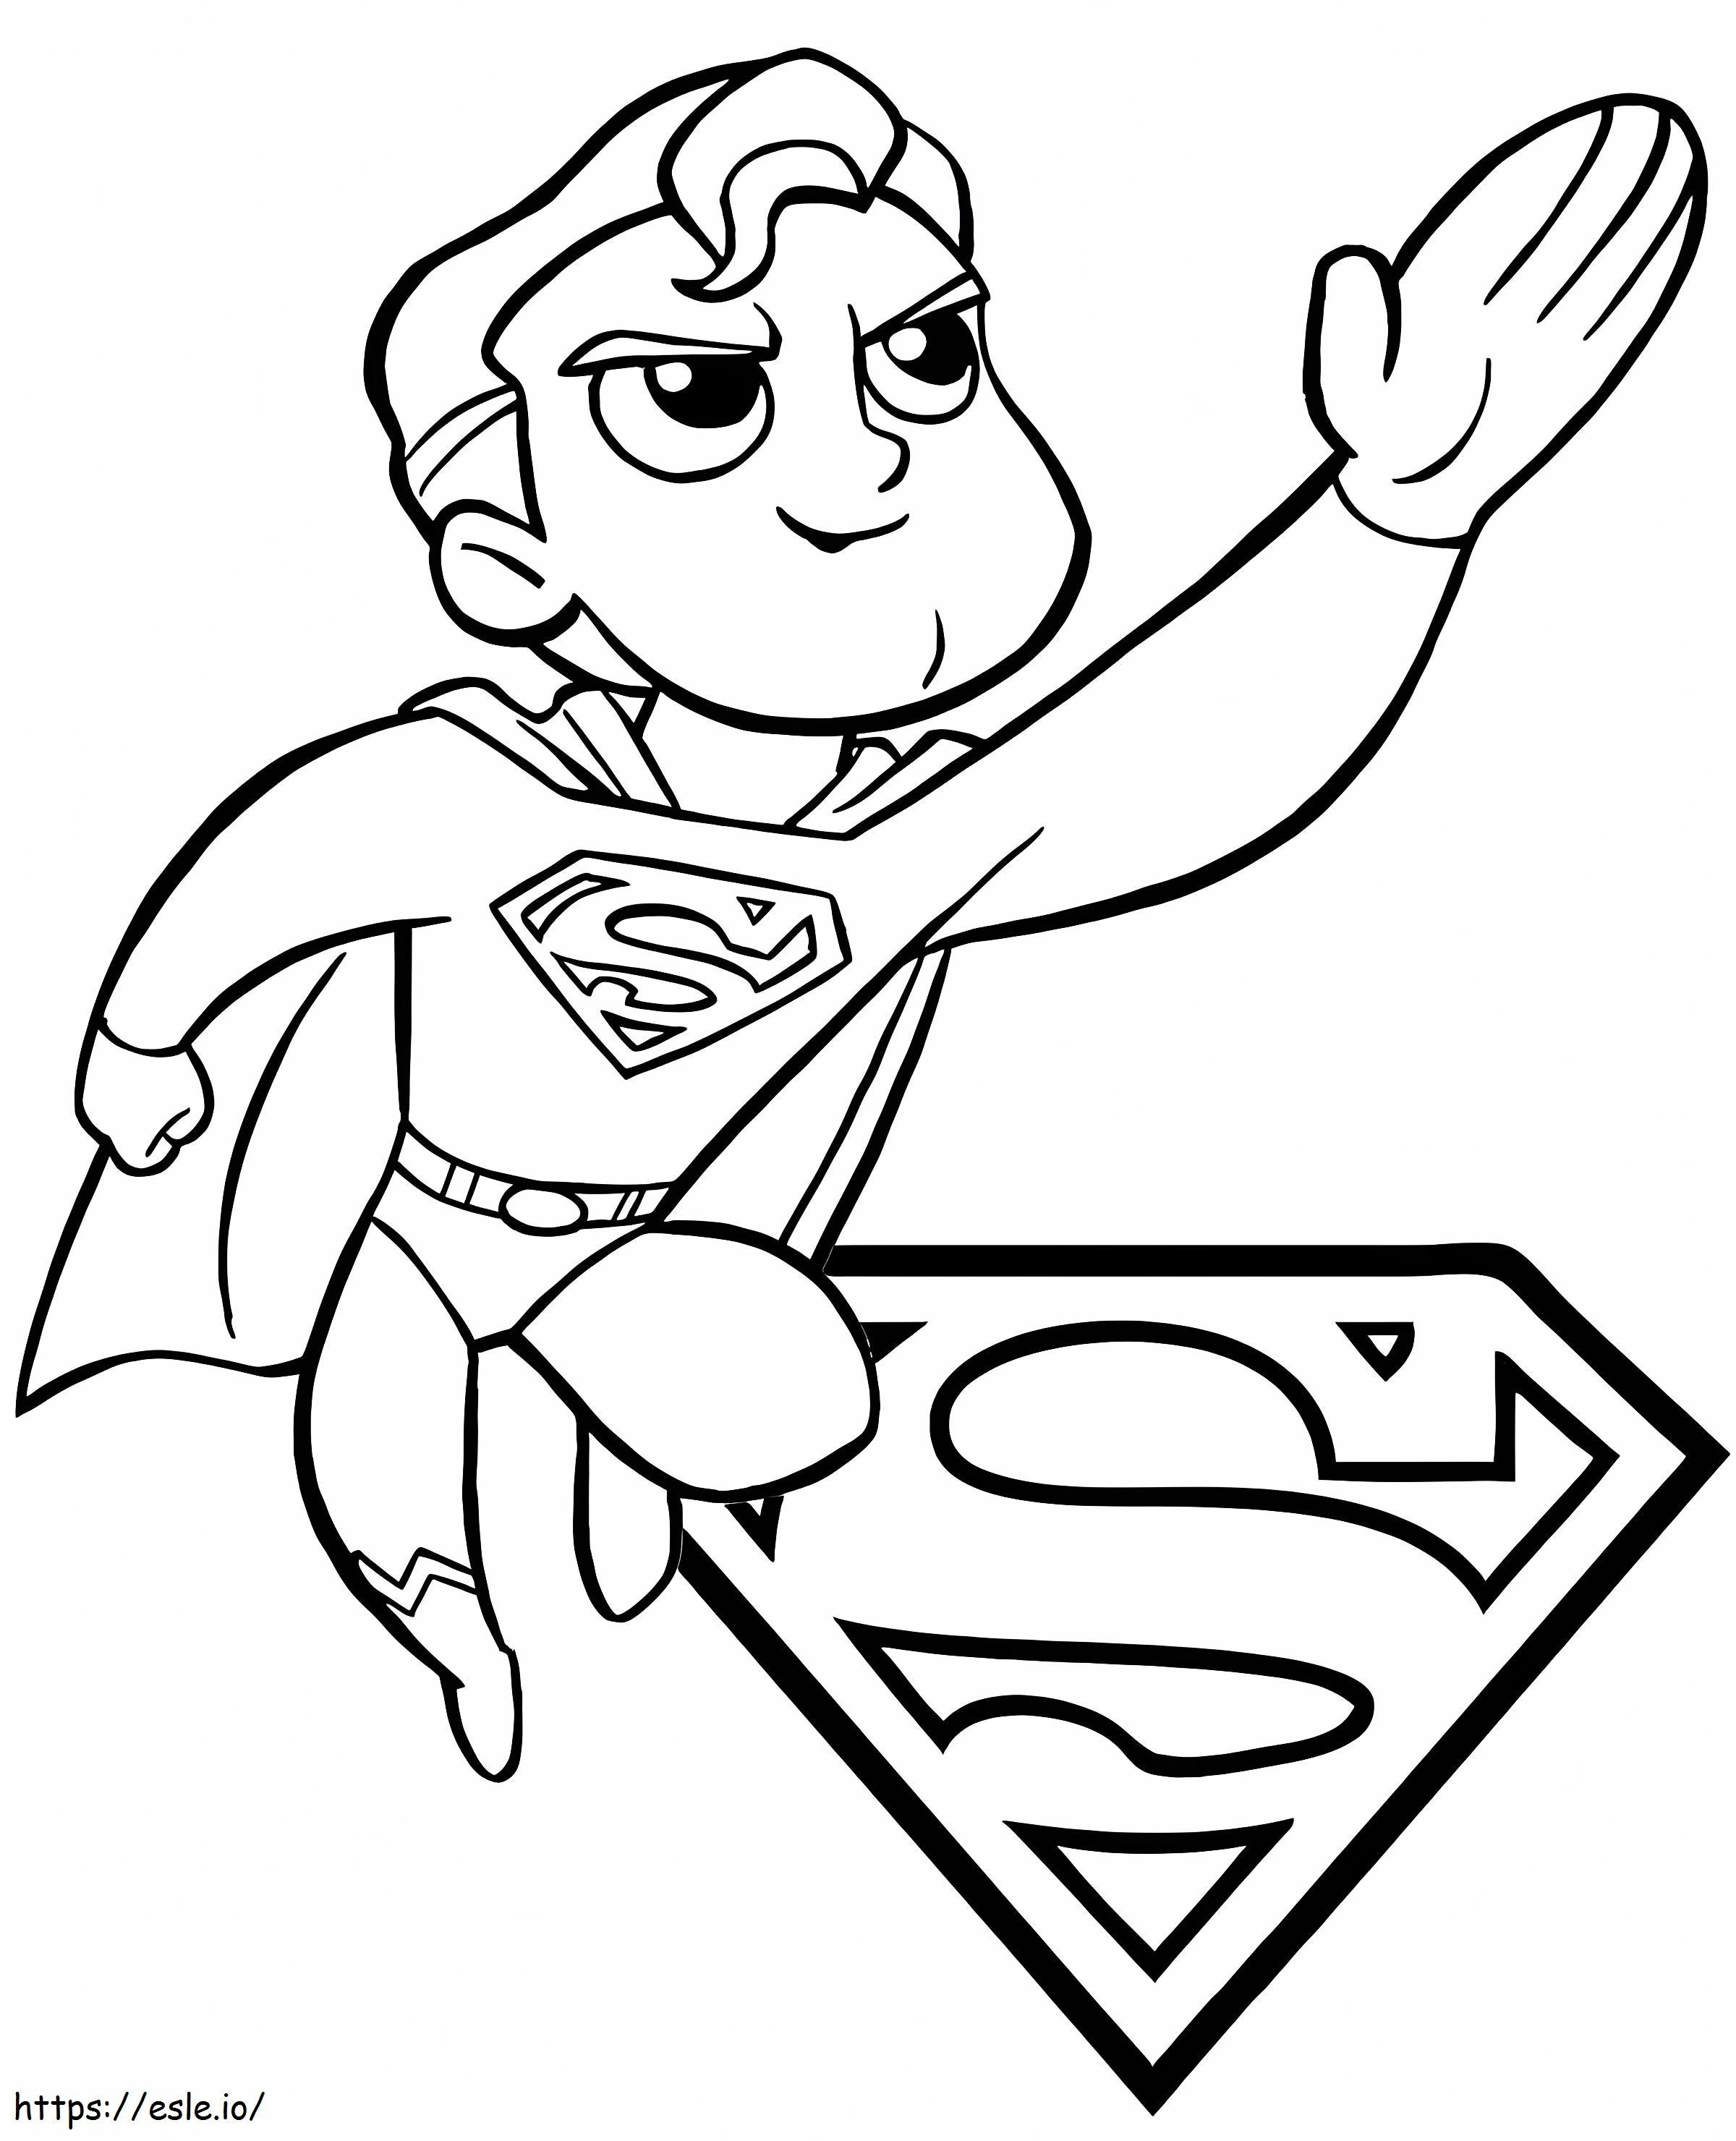 Chibi Superman coloring page